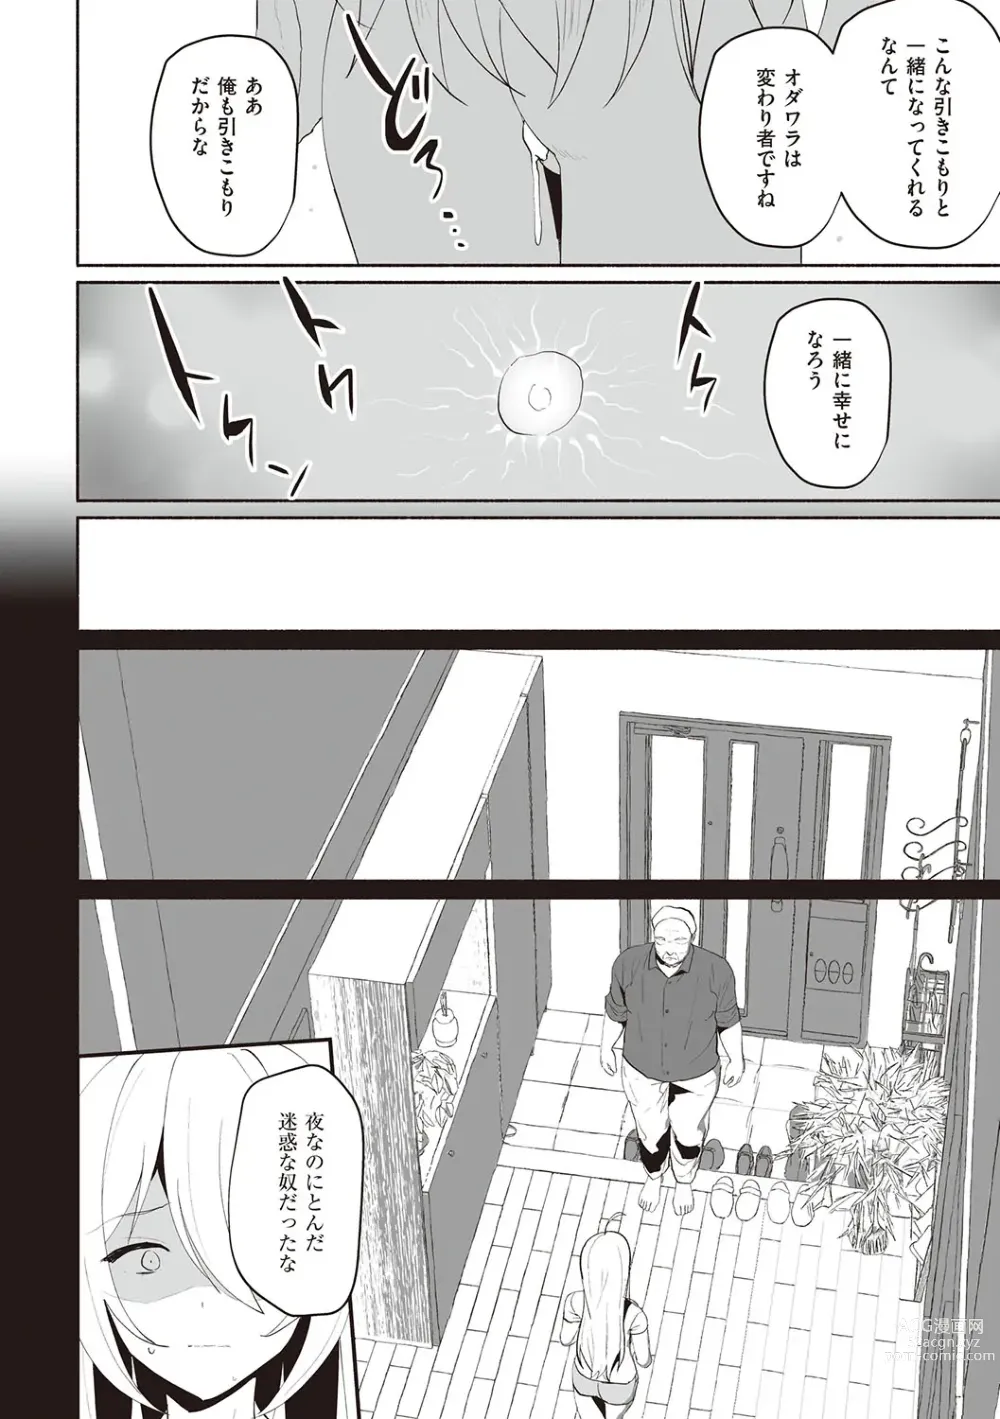 Page 225 of manga Secret Immoral